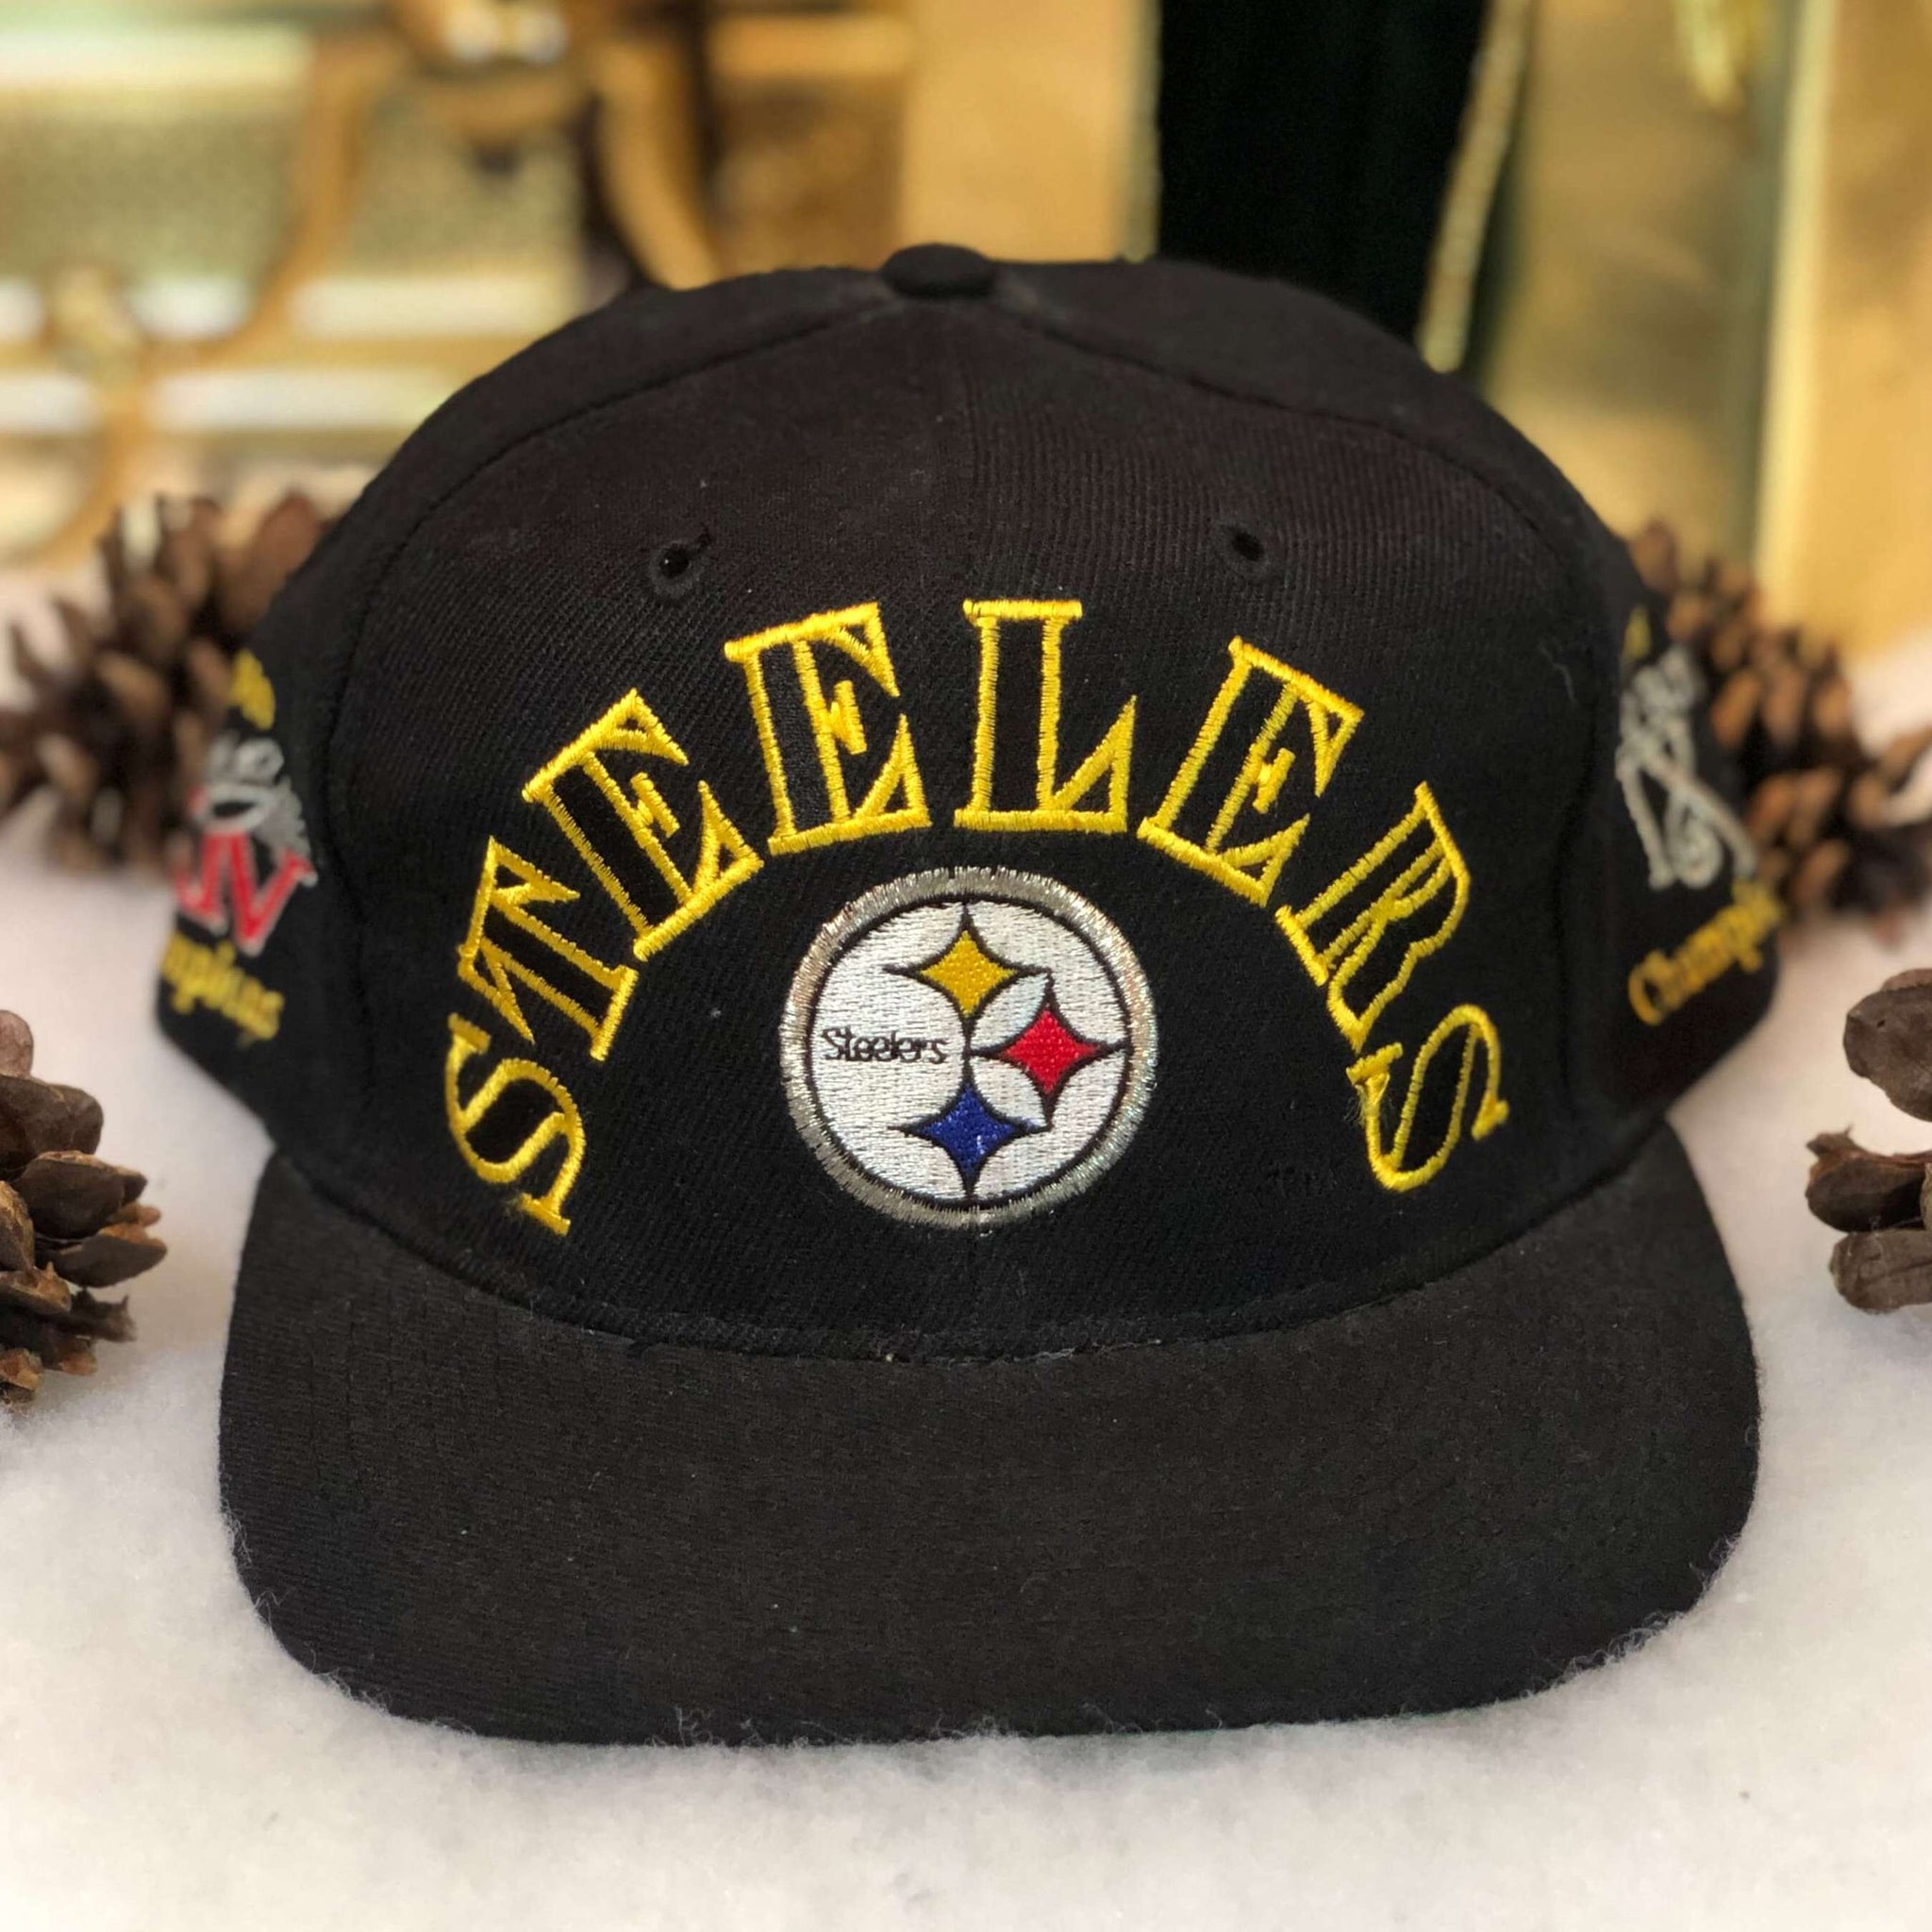 Vintage NFL Pittsburgh Steelers Annco Championship Wool Snapback Hat